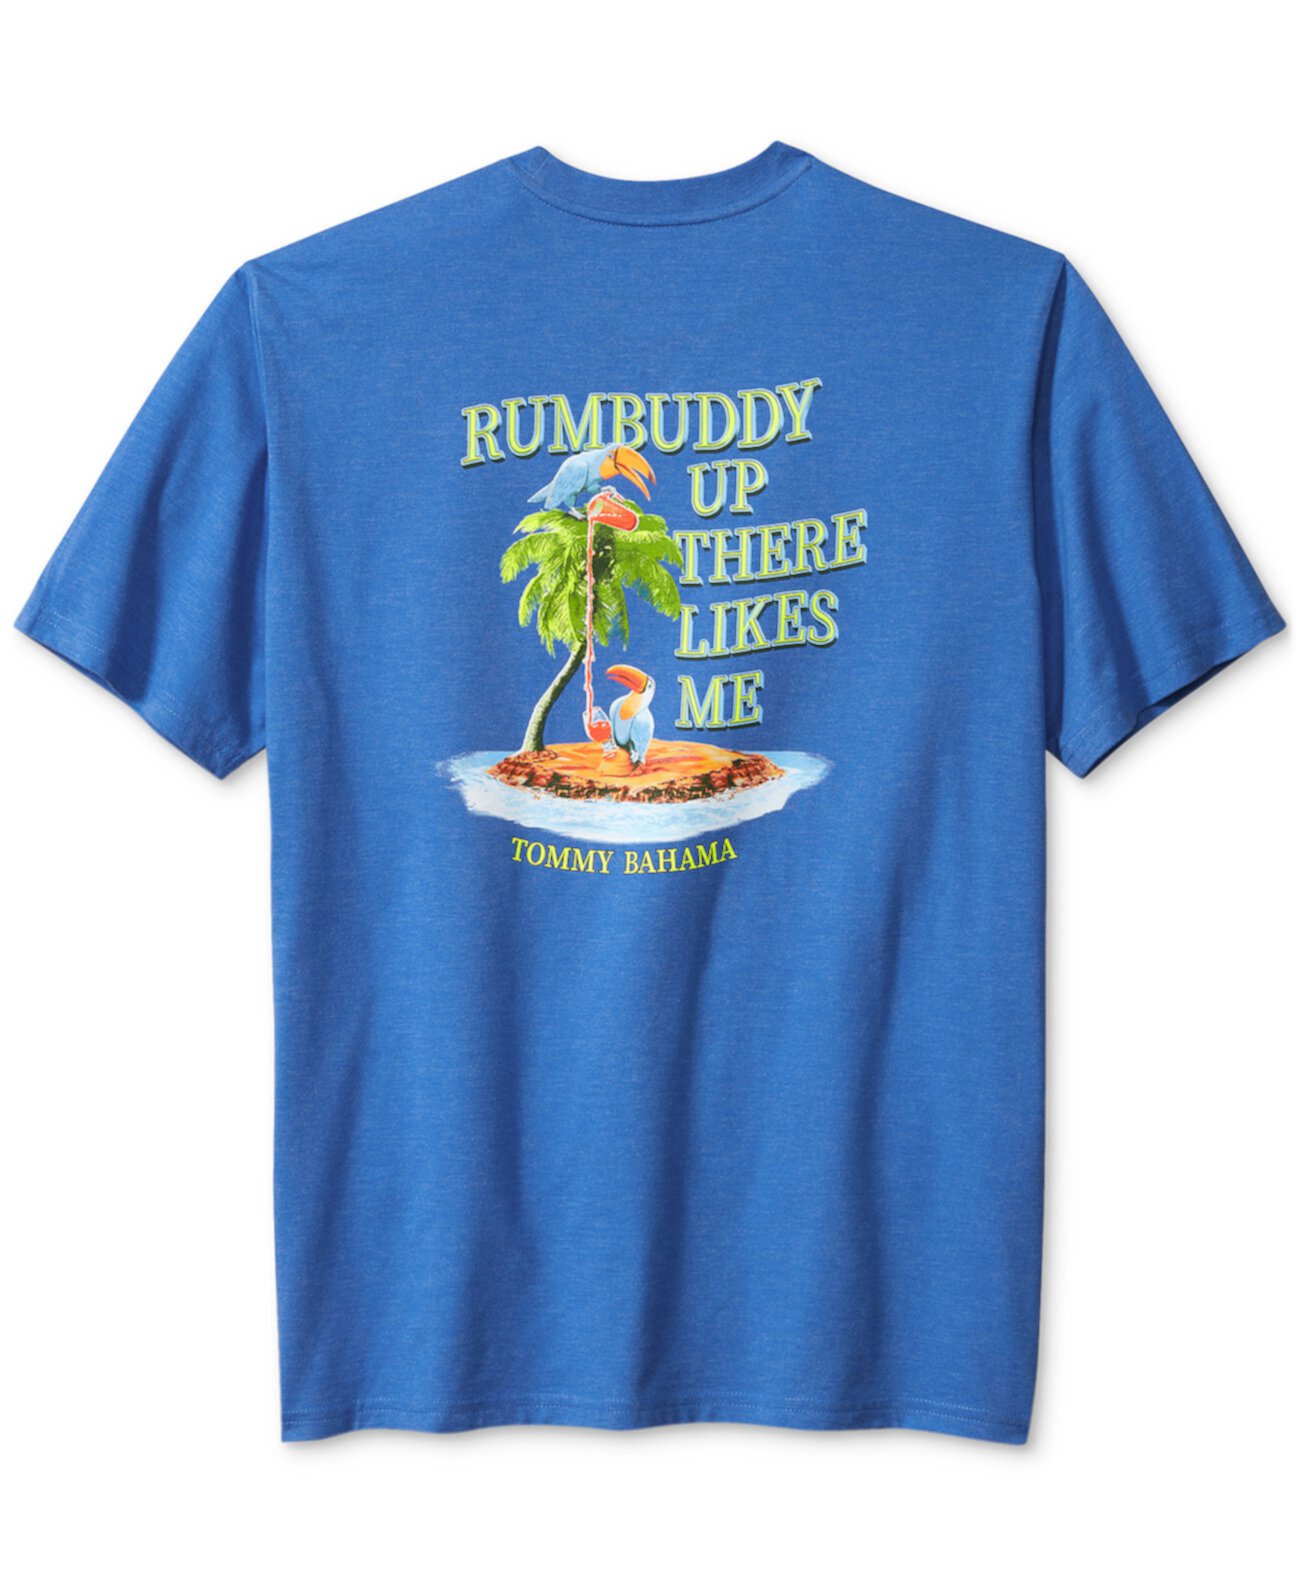 Мужская футболка с коротким рукавом и рисунком Rumbuddy Up There Tommy Bahama